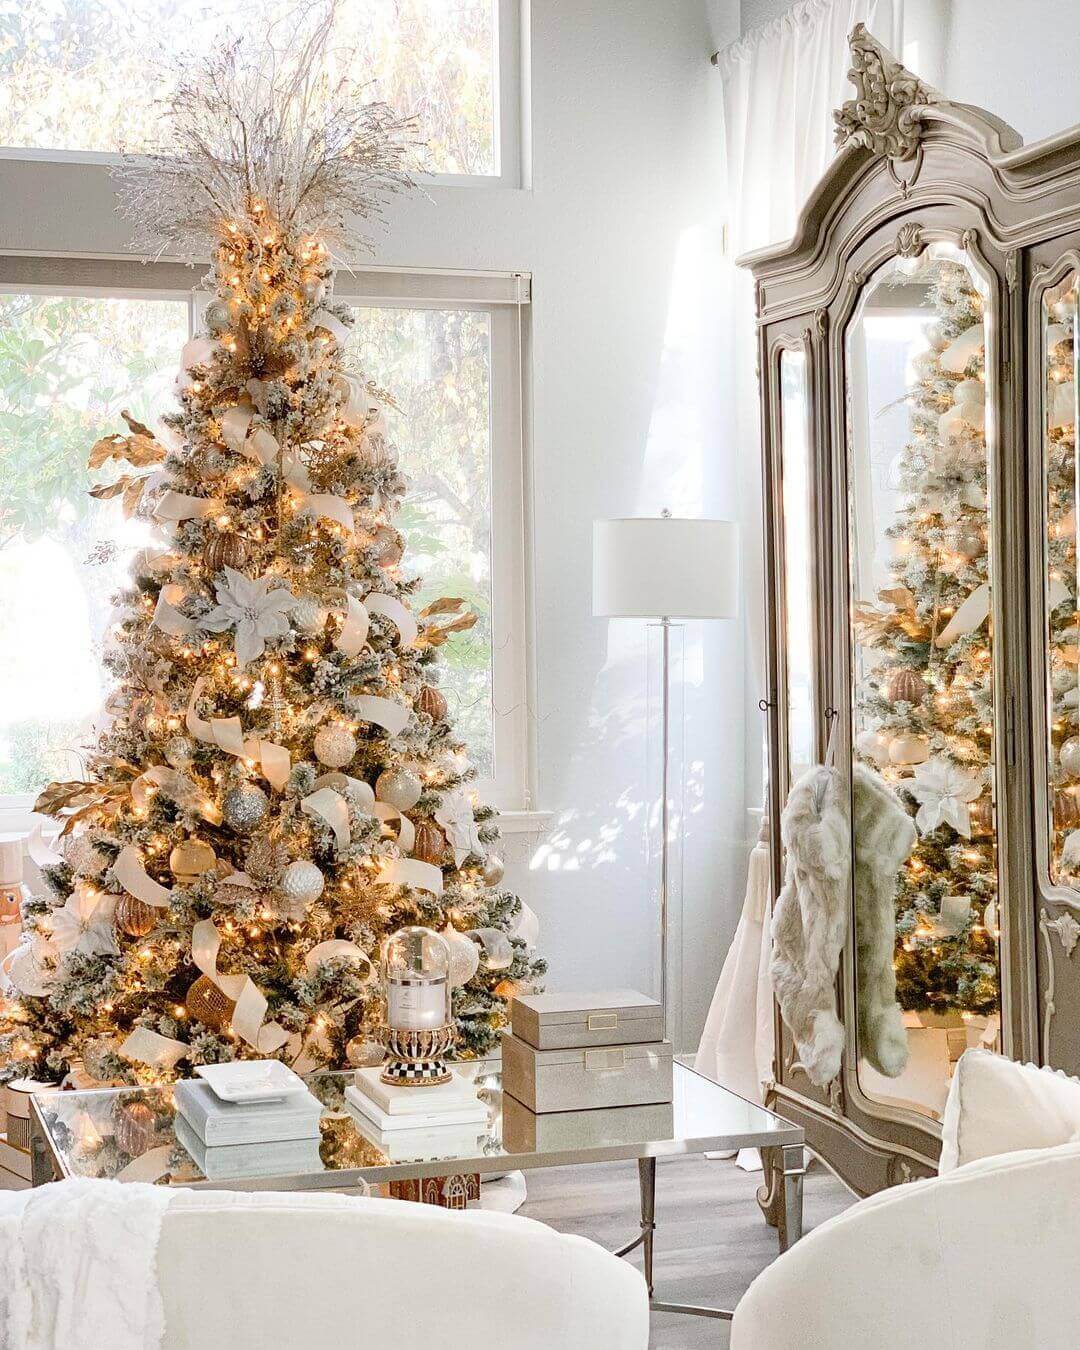 King of Christmas 8' Prince Flock® Artificial Christmas Tree with 550 Warm White LED Lights